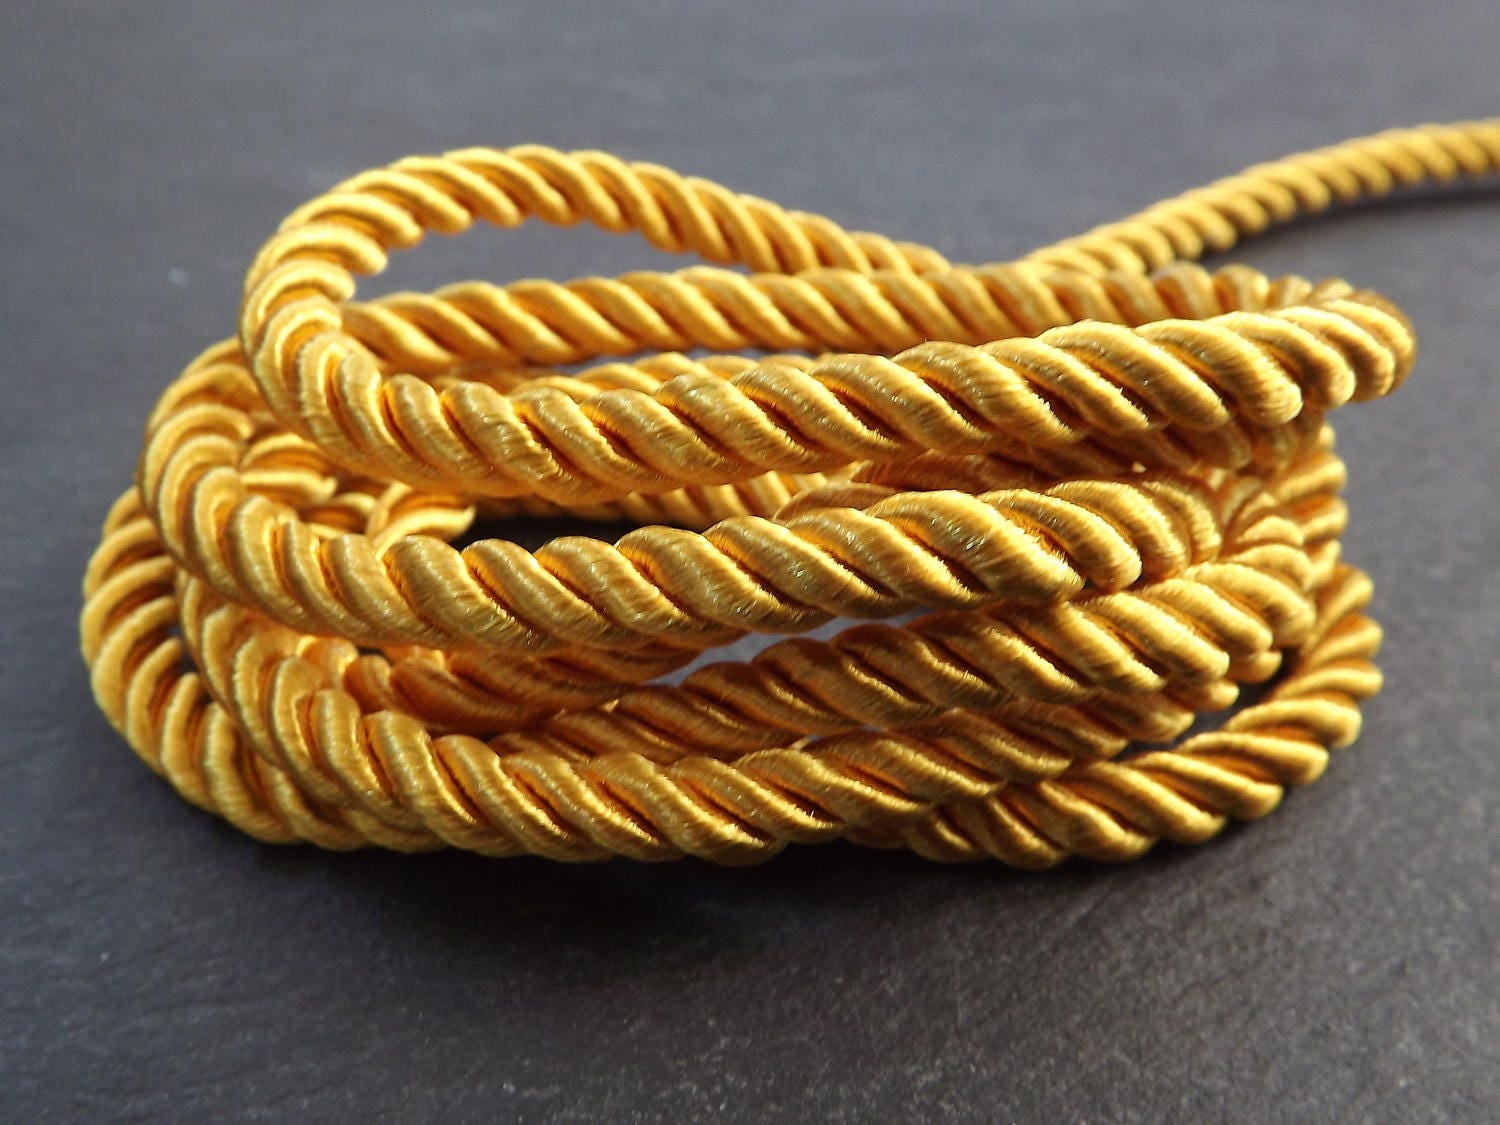 Warm Yellow 5mm Twisted Rayon Satin Rope Silk Braid Cord - 3 Ply Twist - 1 meters - 1.09 Yards